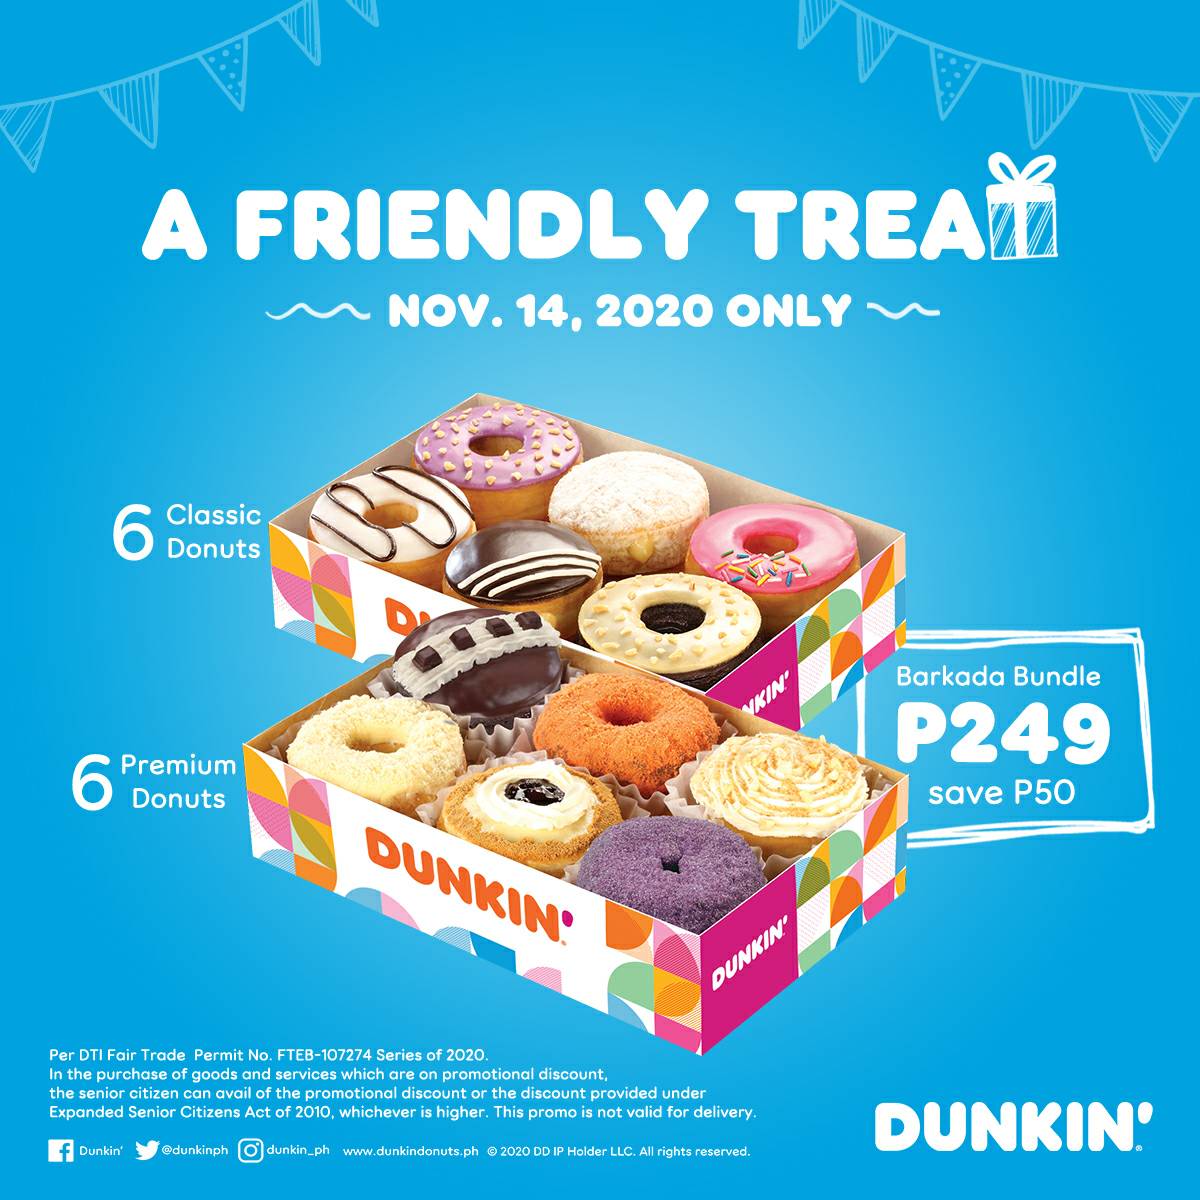 Manila Shopper Dunkin Donuts Friendly Treat Promo Nov 14 2020